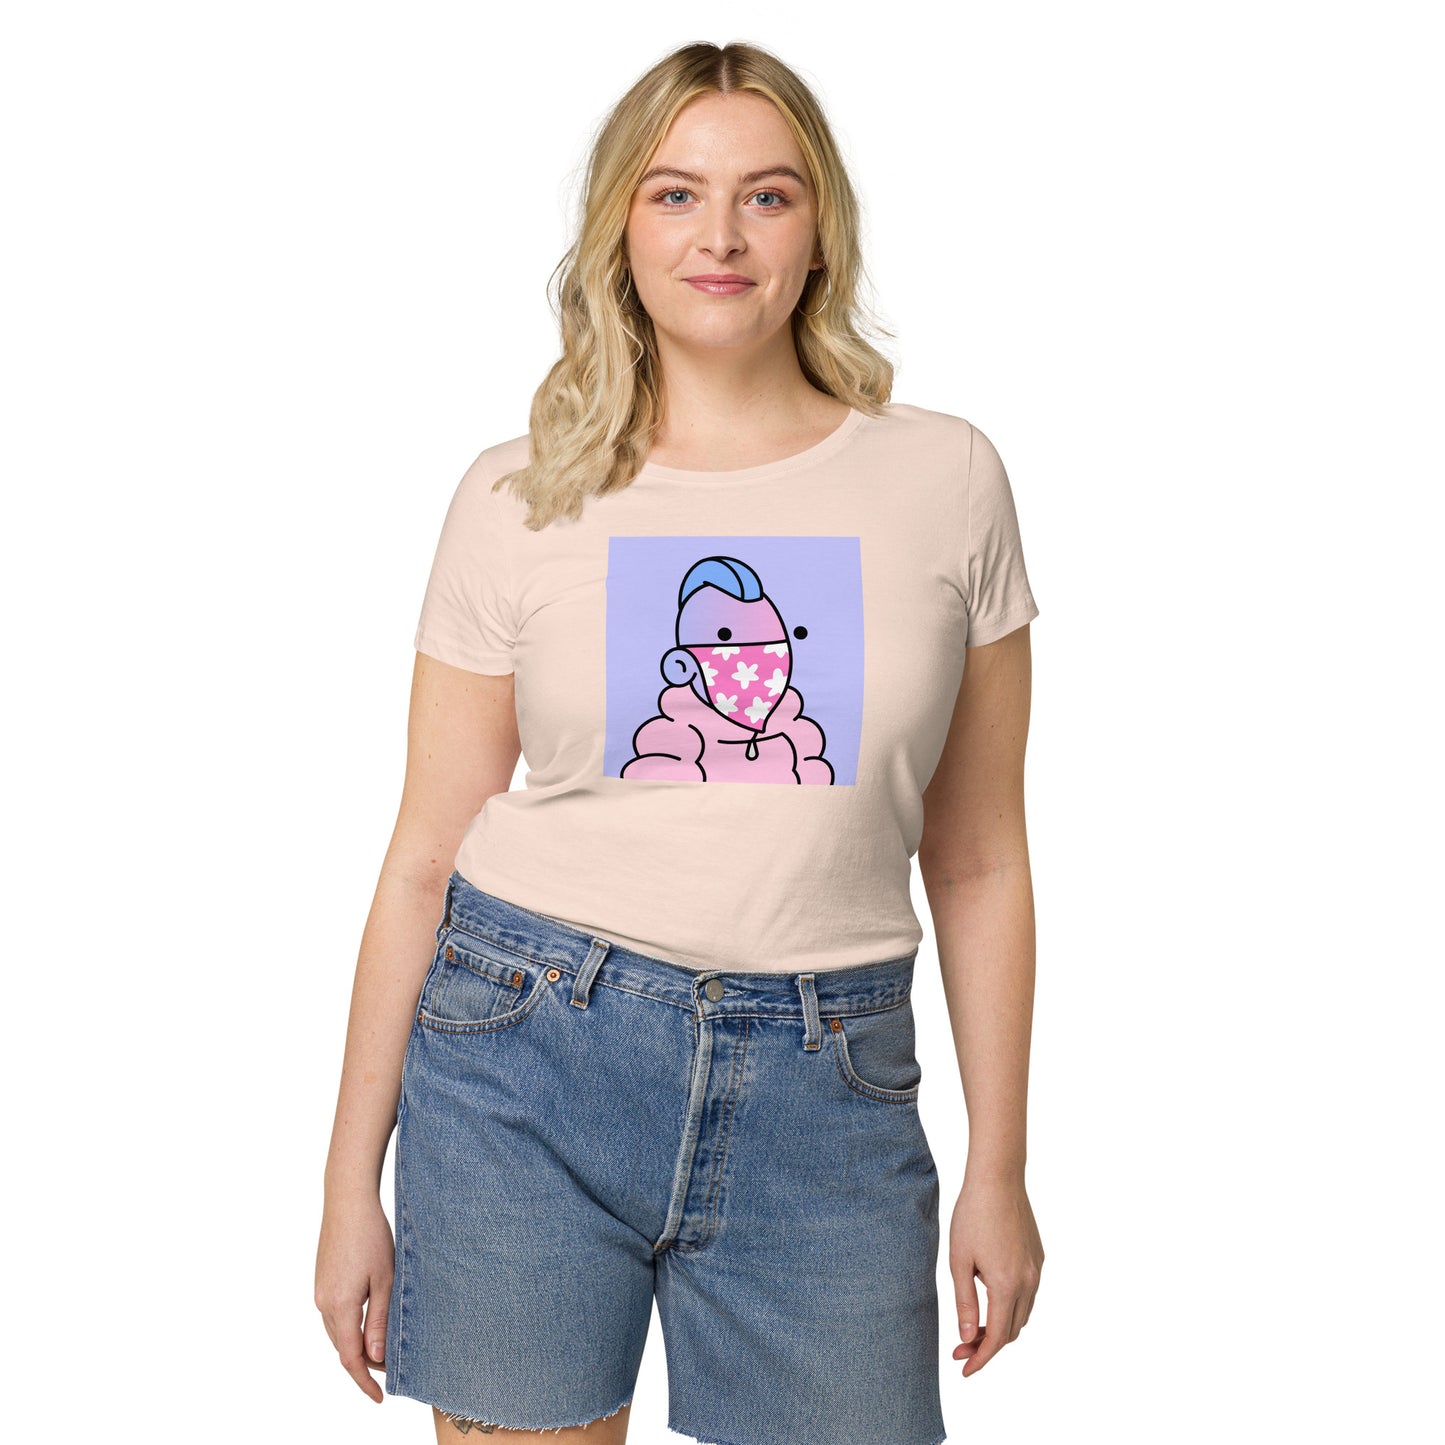 Women’s basic organic t-shirt feat Doodle #8515